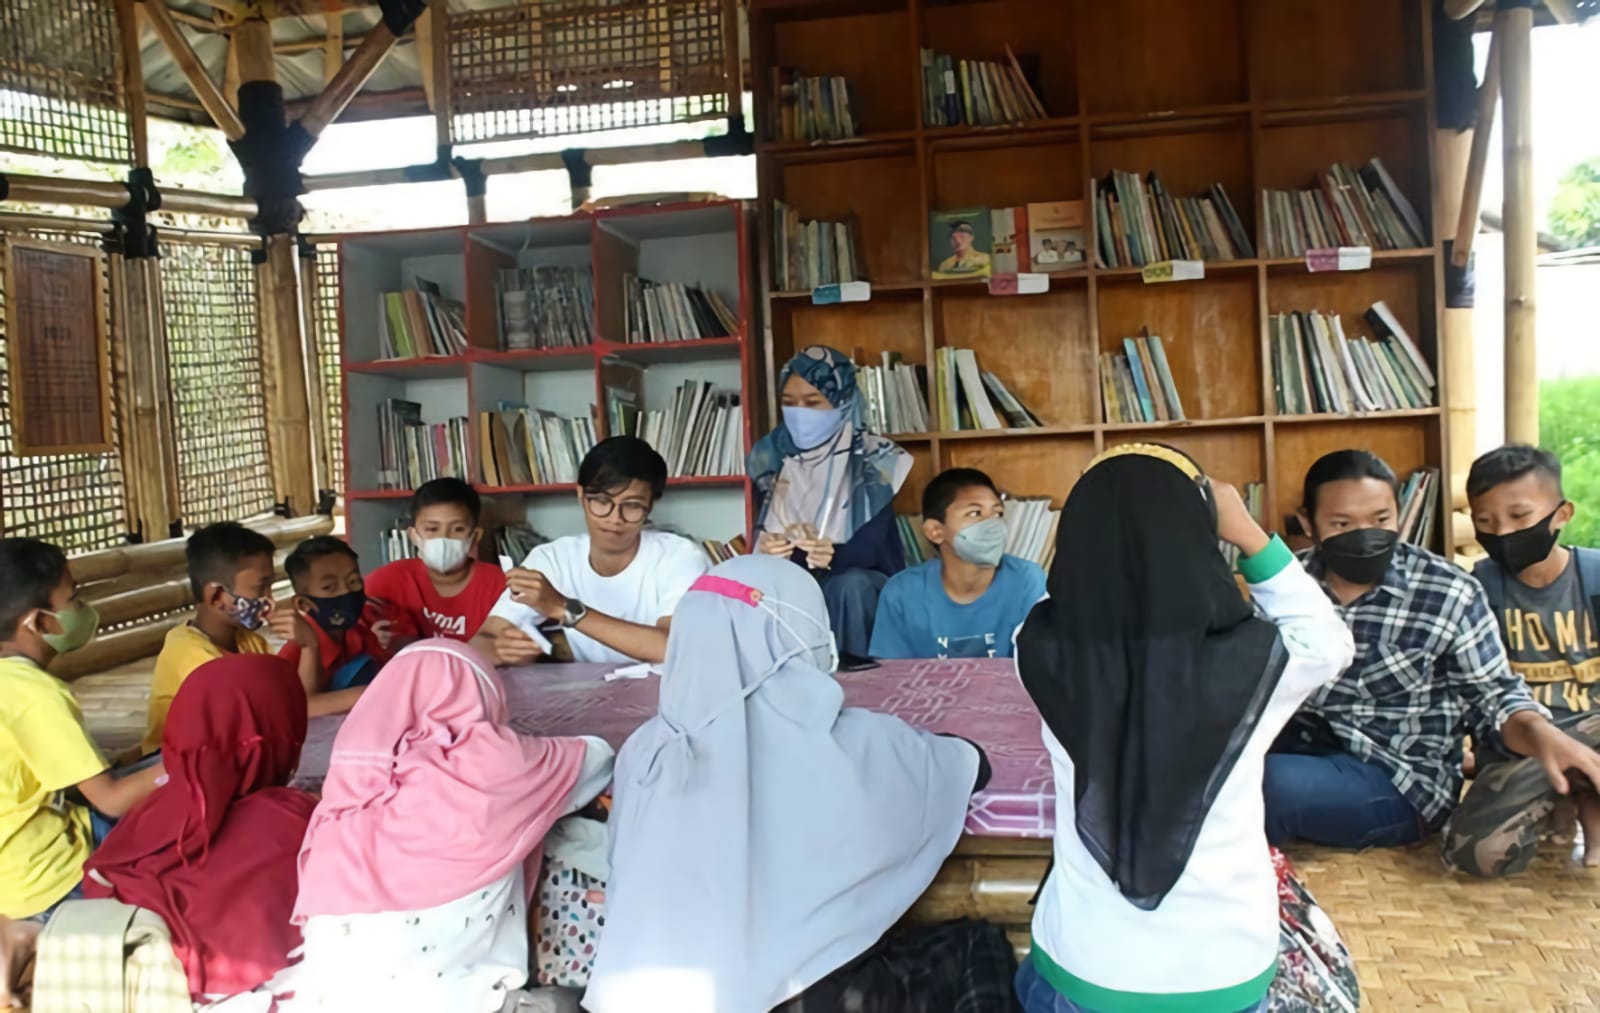 Anak-anak Desa Citaman, Kecamatan Nagreg, Kabupaten Bandung tengah dibimbing materi pelajaran oleh para pemuda Desa Citaman. (Istimewa)